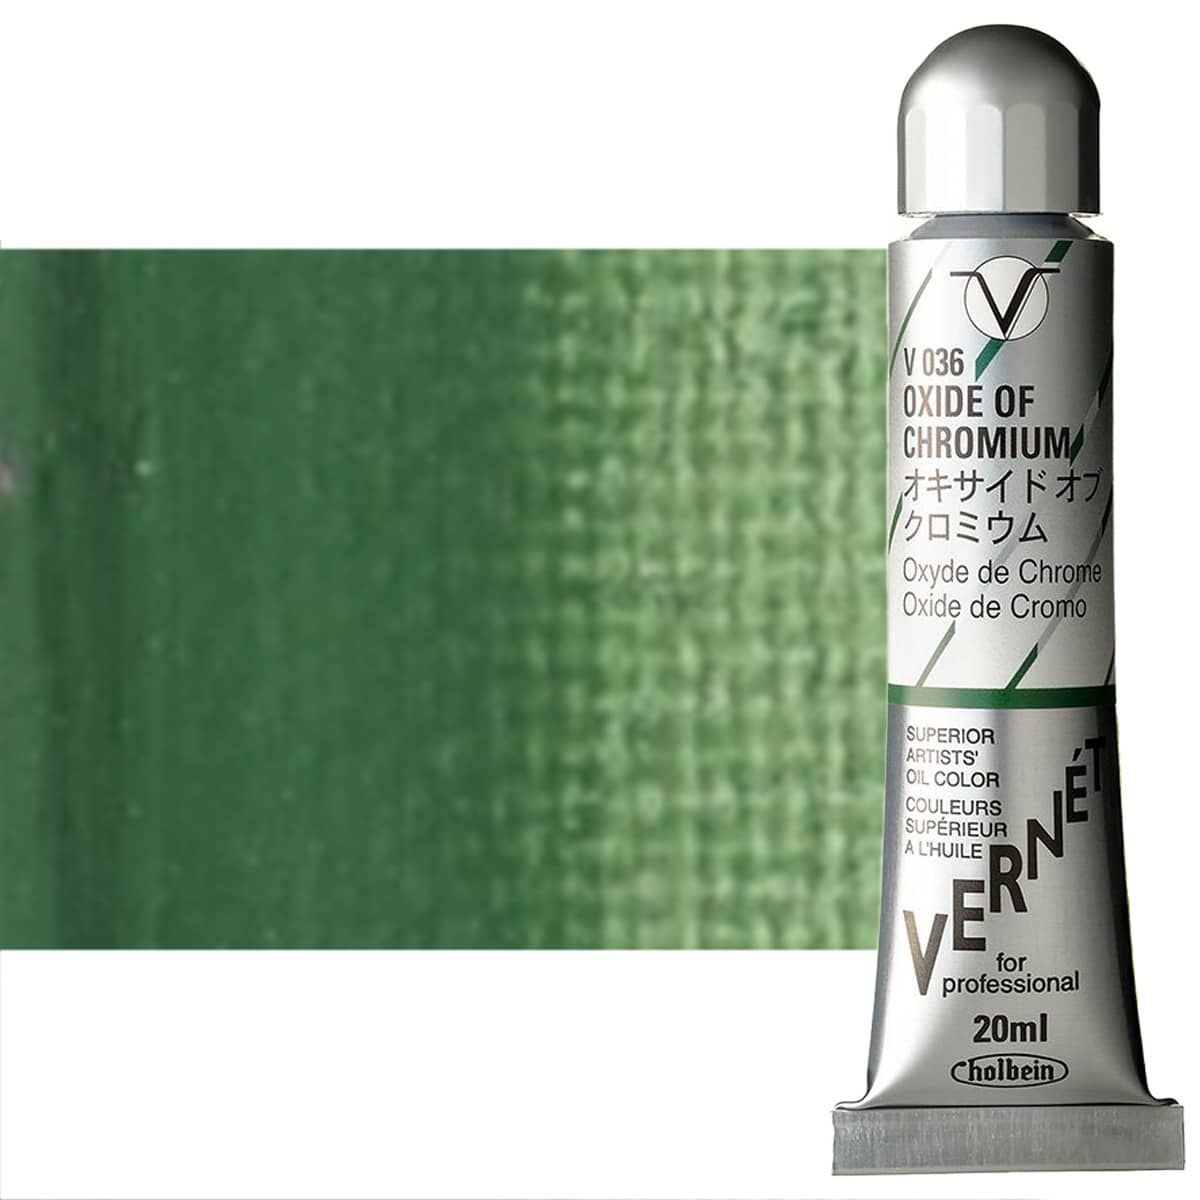 Holbein Vern?t Oil Color 20 ml Tube - Oxide of Chromium